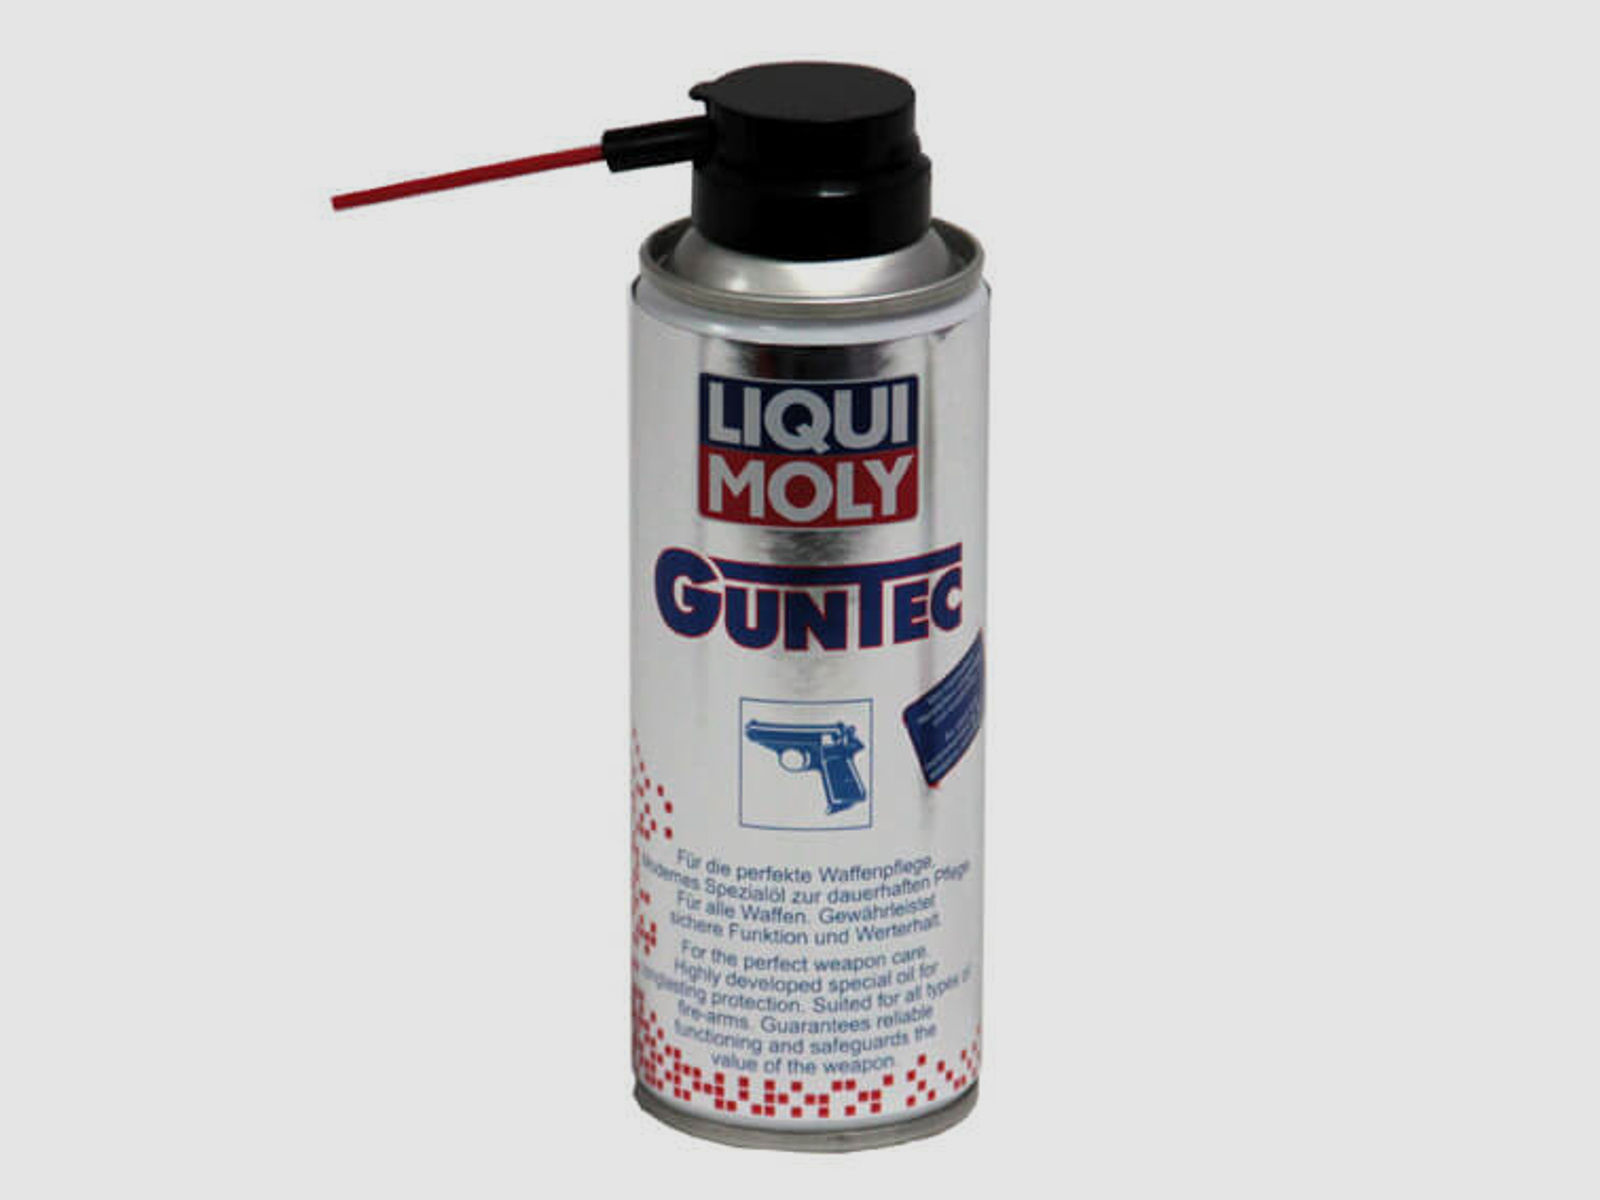 Liqui Moly GunTec Waffenpflege Öl Spray 200ml